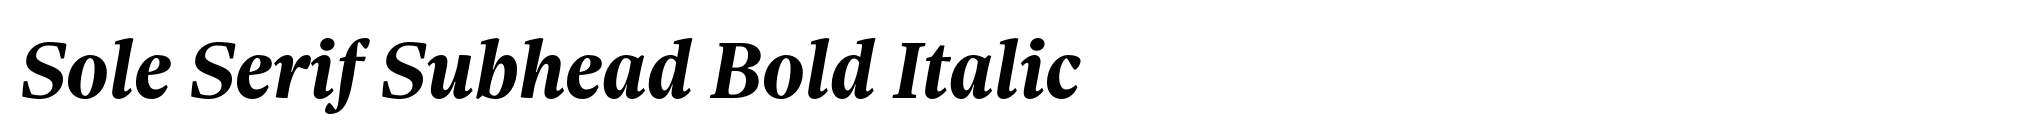 Sole Serif Subhead Bold Italic image